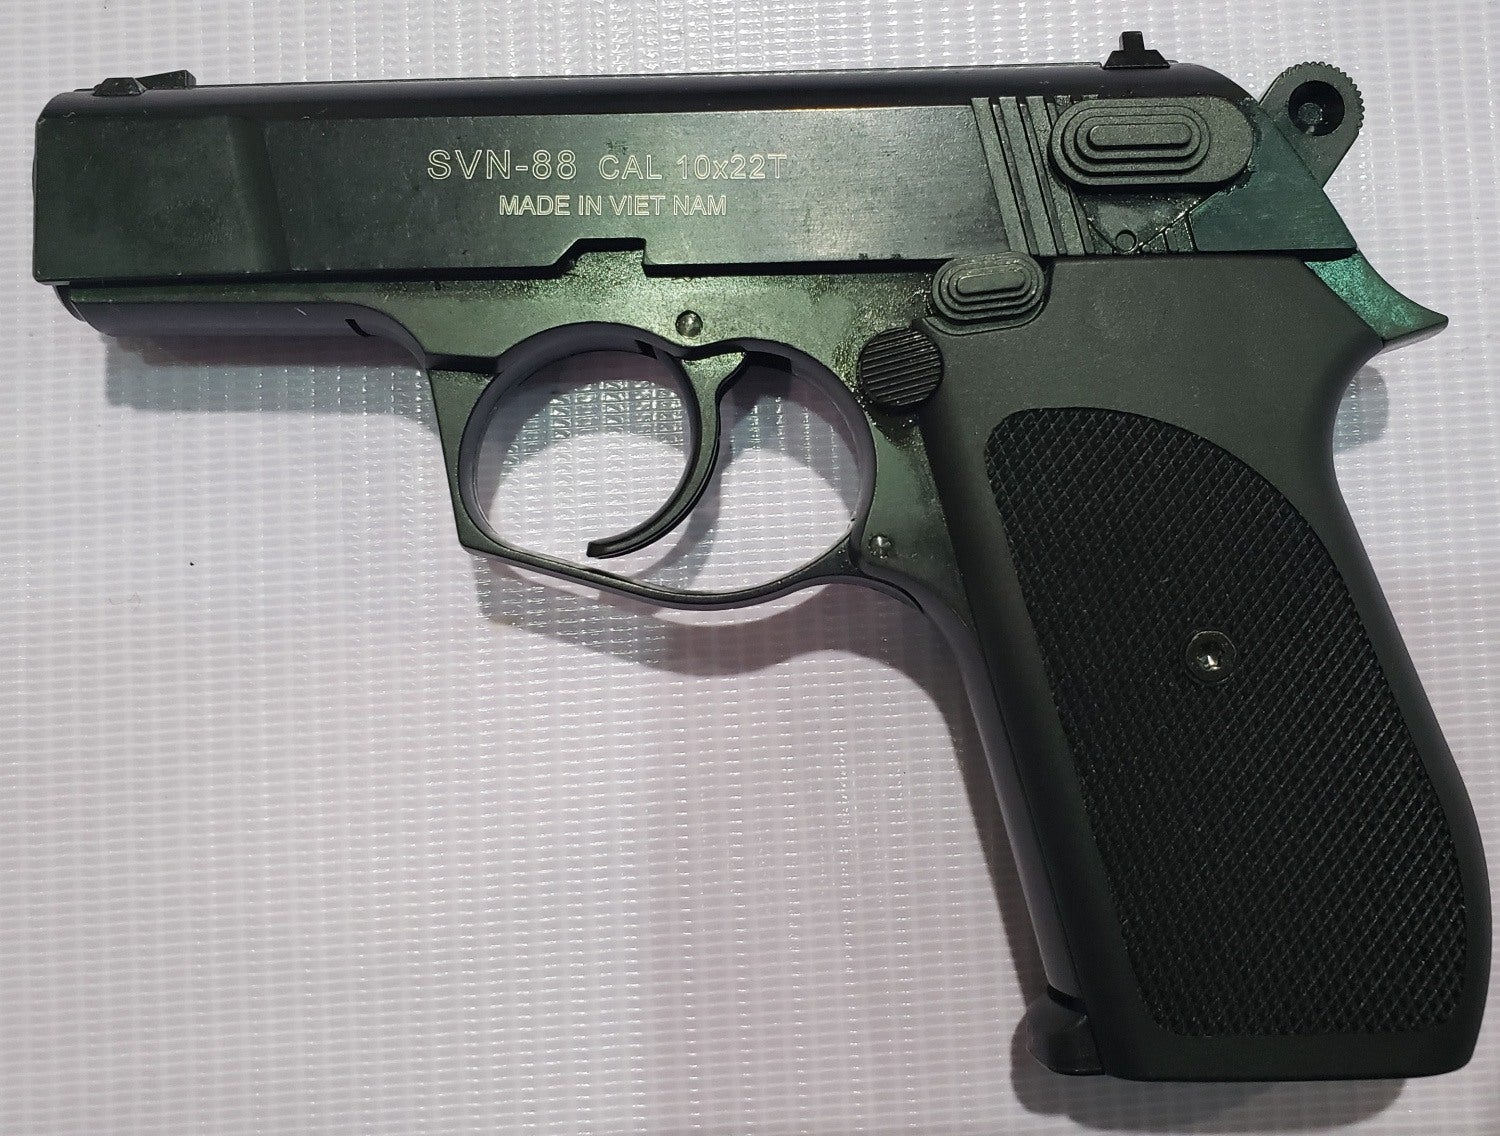 SVN-88 pistol